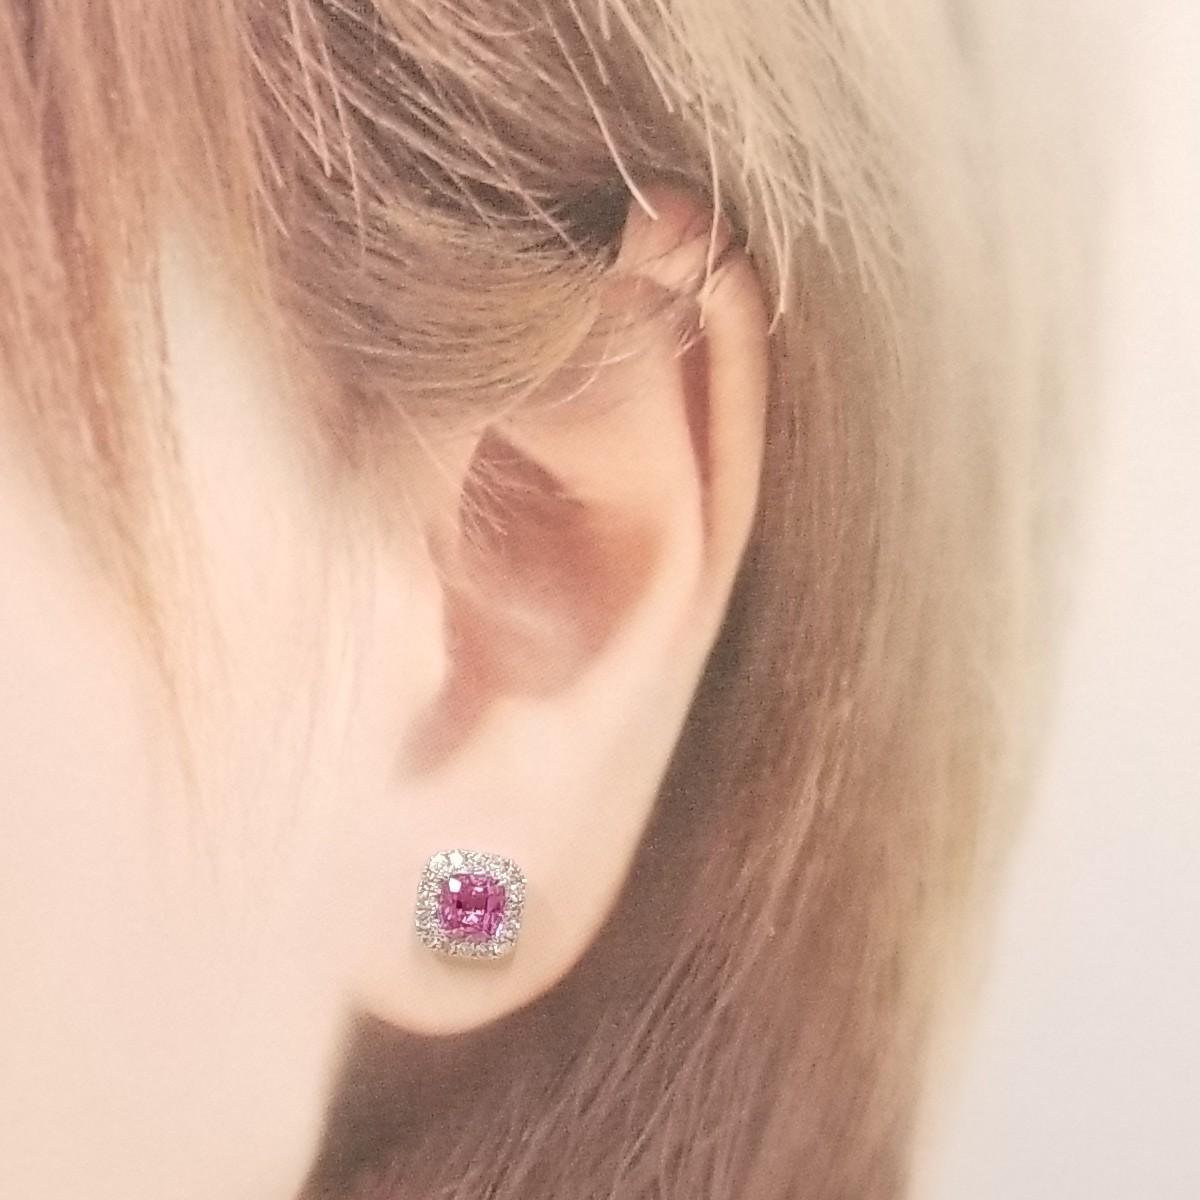 IGI Certified 1.78 Carat Pink Sapphire & Diamond Earring in 18K White Gold For Sale 1